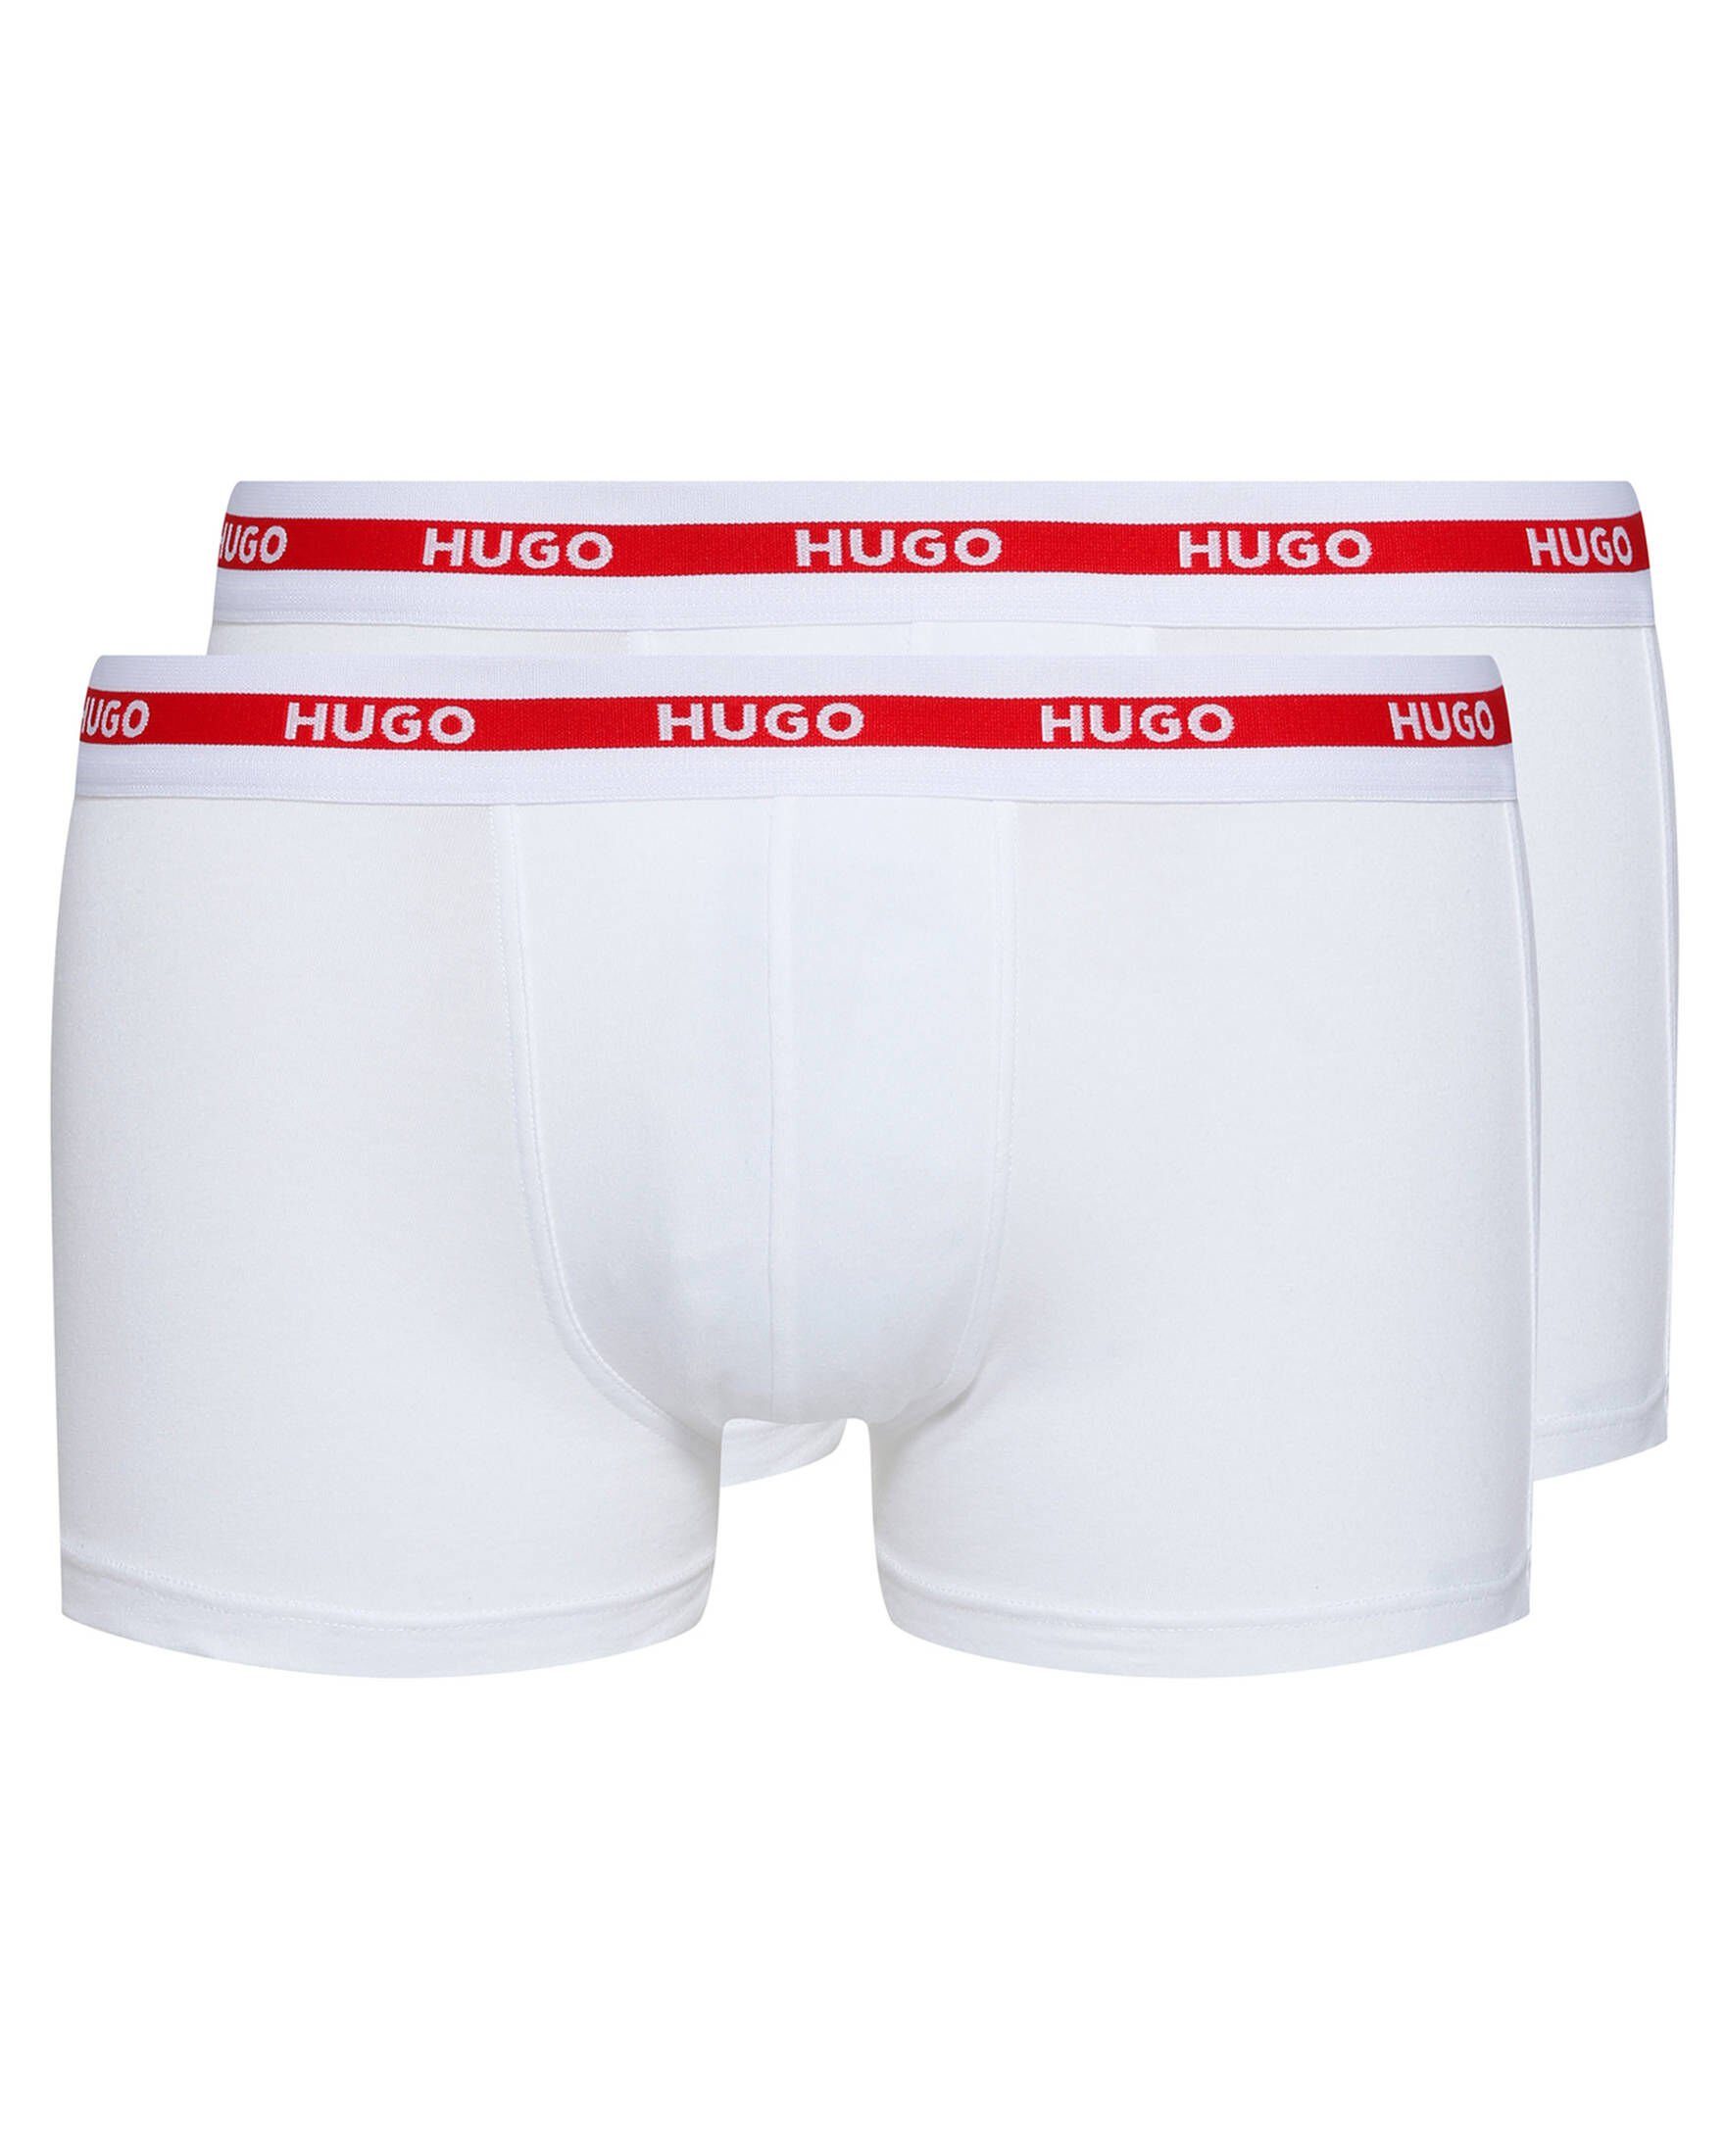 HUGO Retro Pants Herren TWIN (10) (3-St) 2er-Set PACK weiss TRUNK Retropants